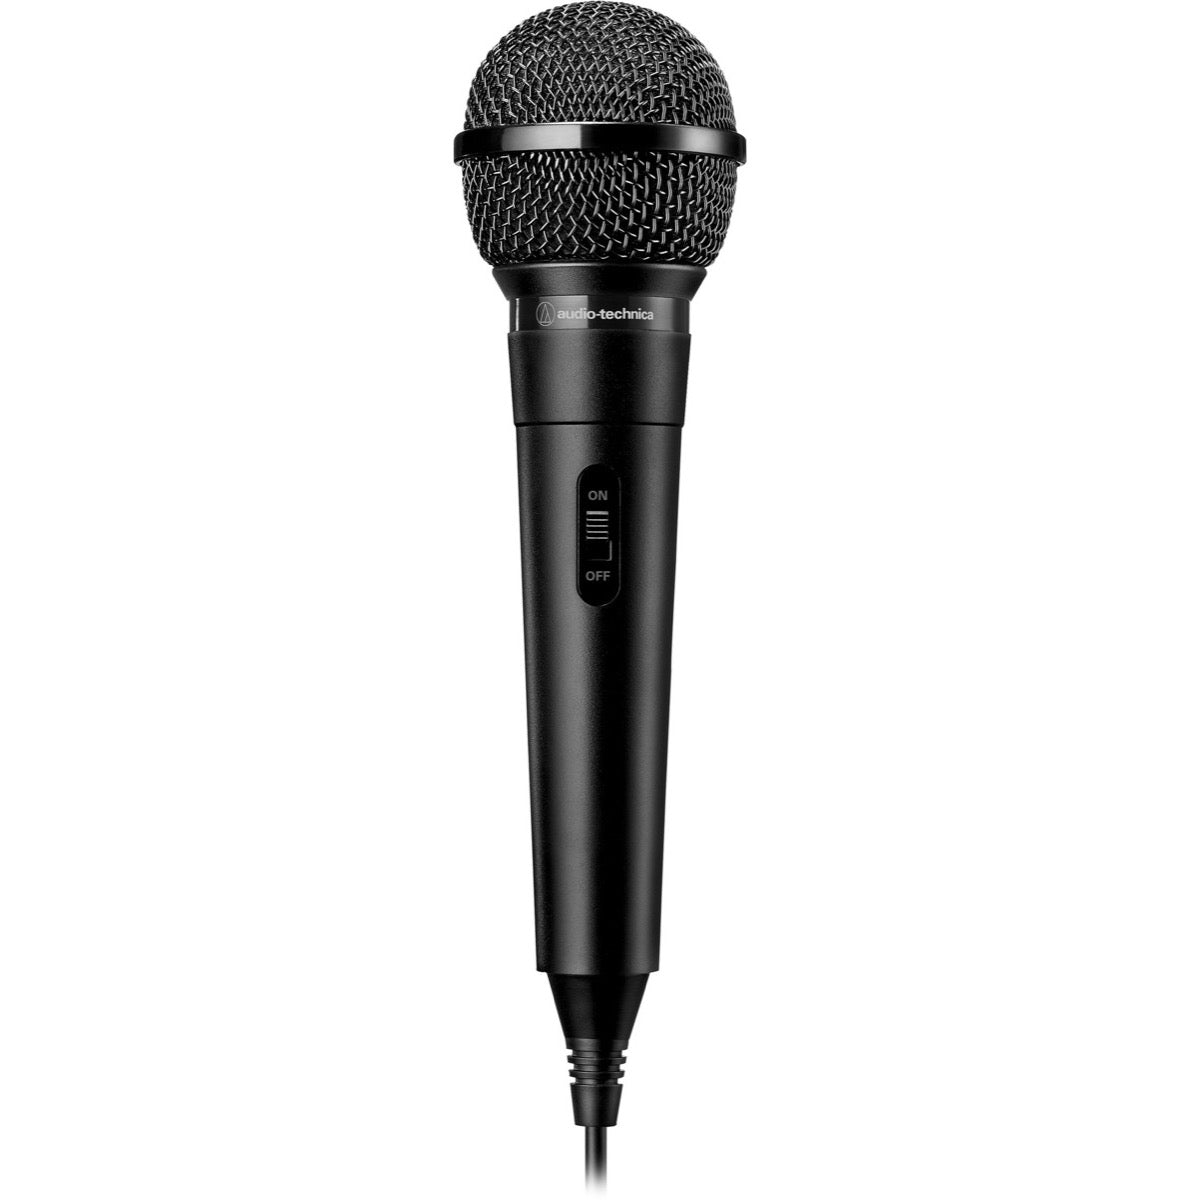 Audio-Technica ATR1100x Unidirectional Handheld Vocal Microphone